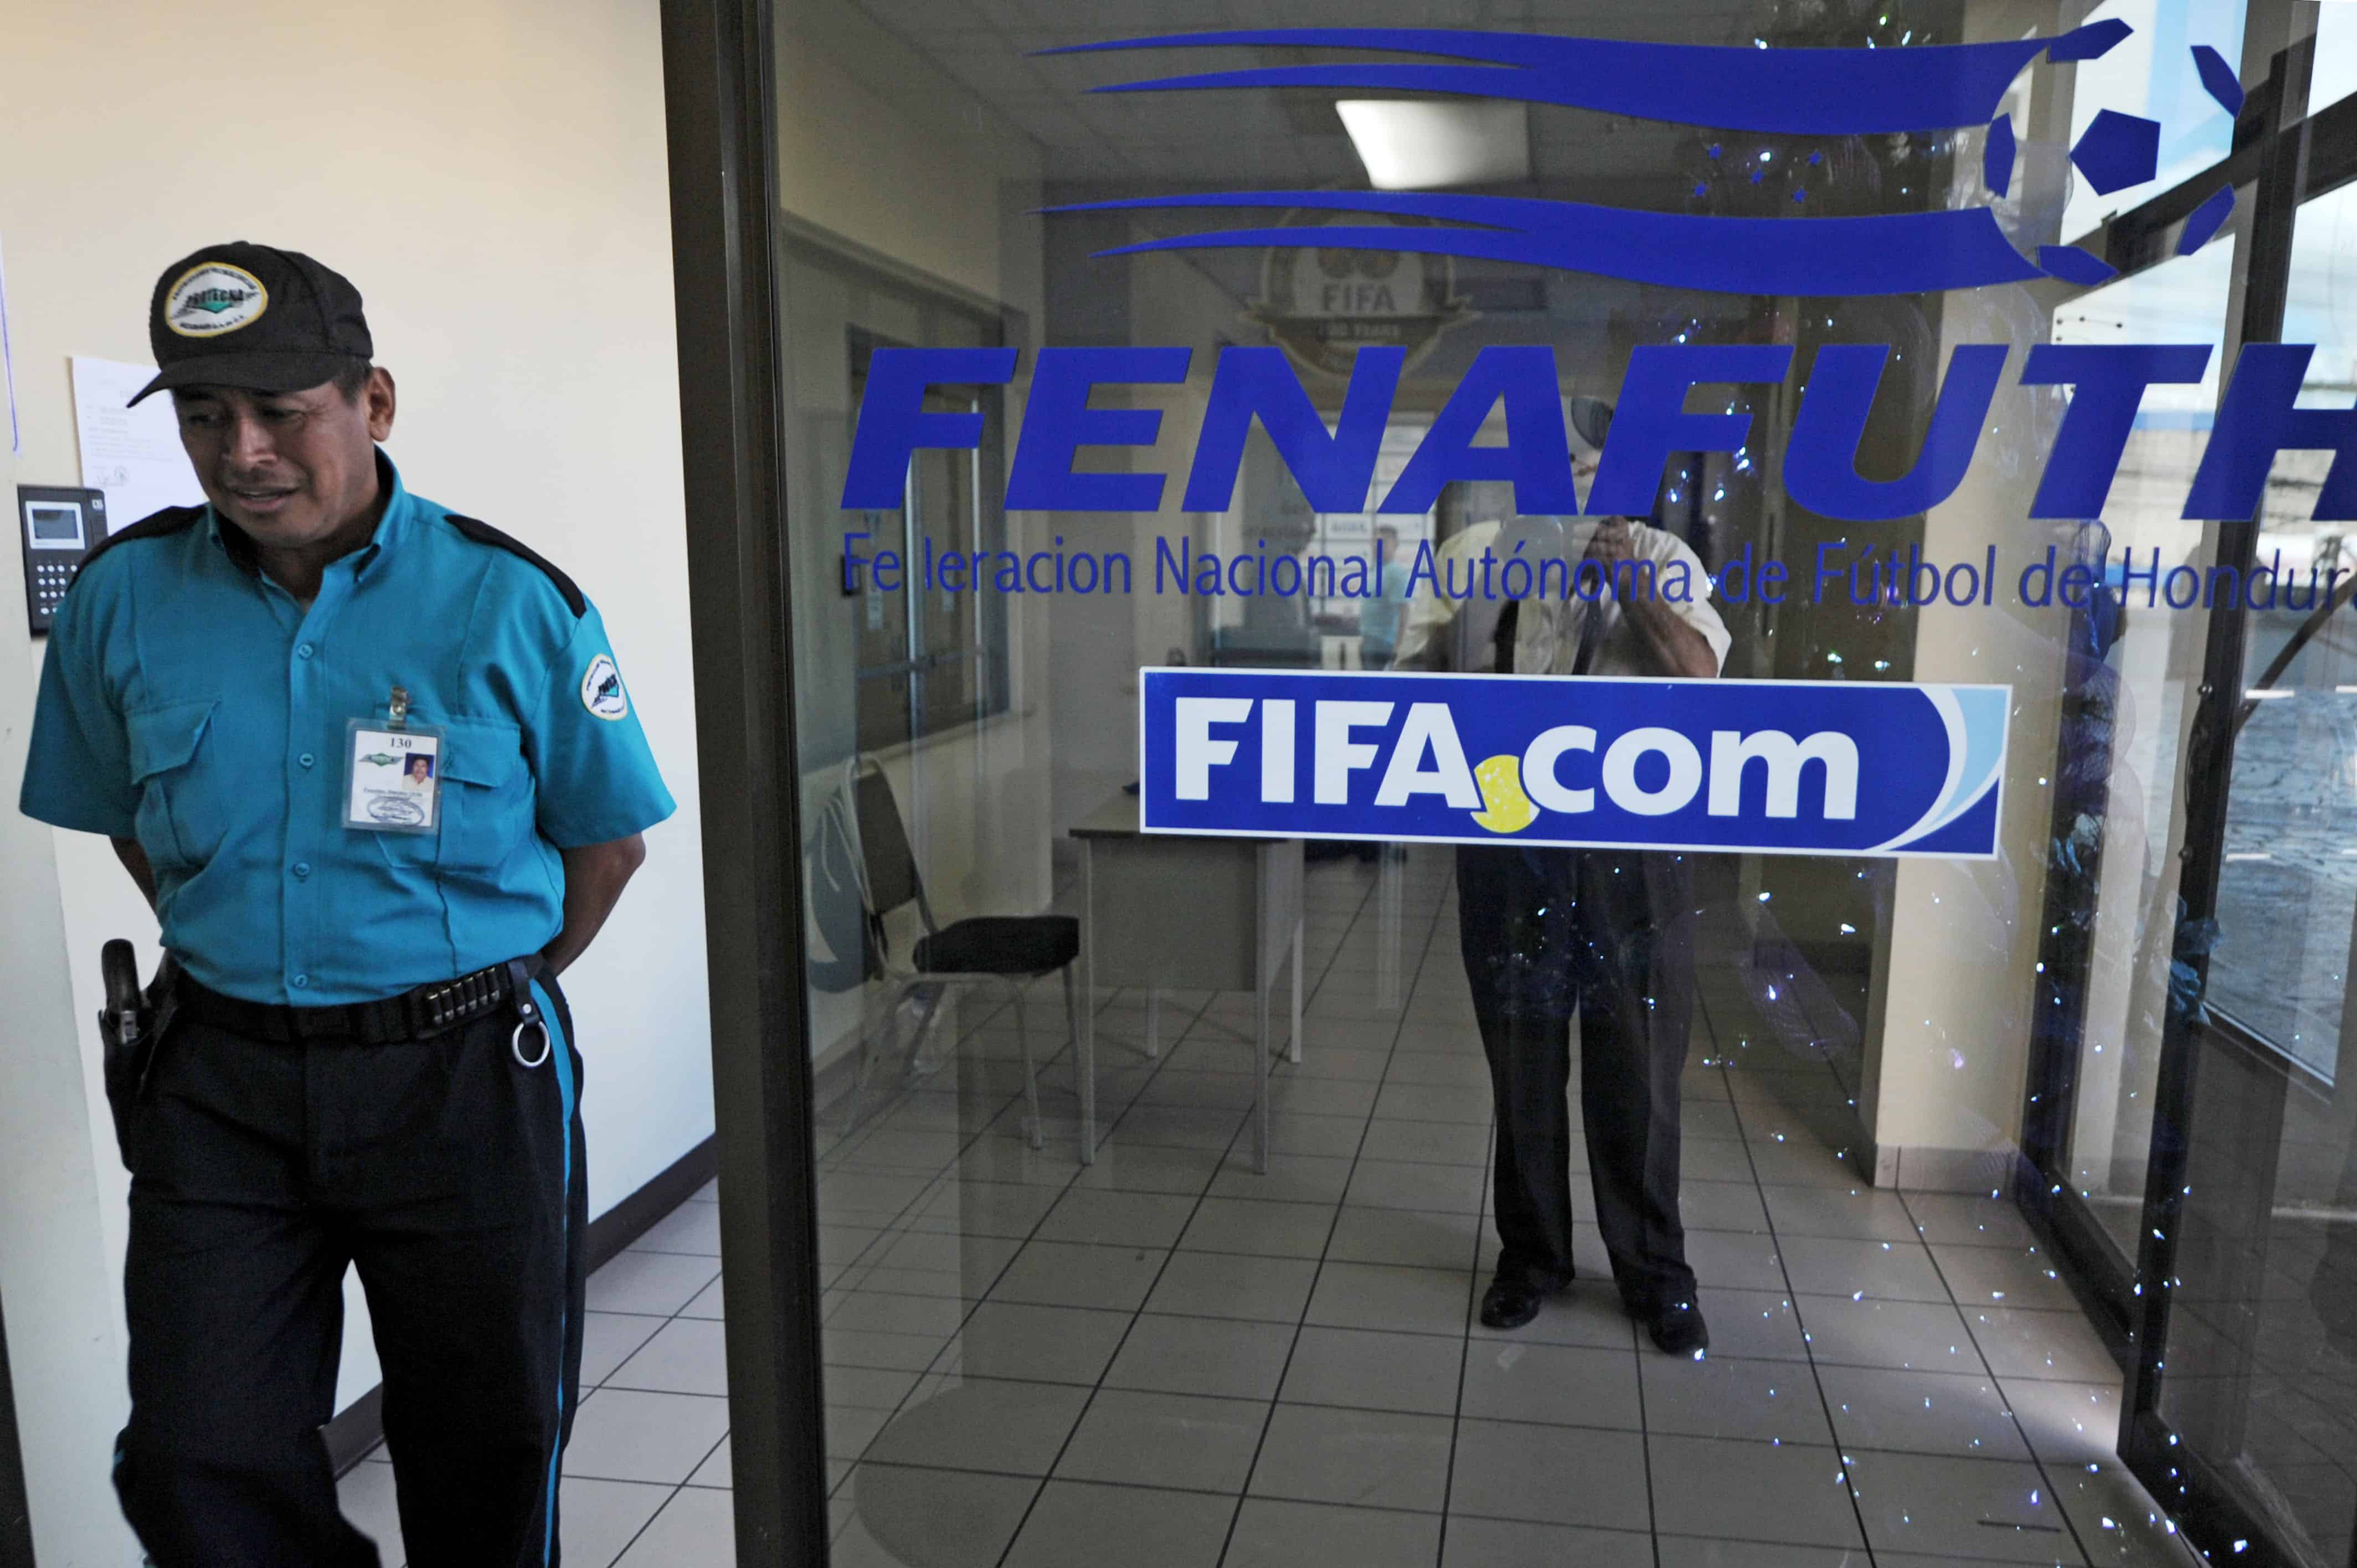 FIFA corruption scandal, Honduras